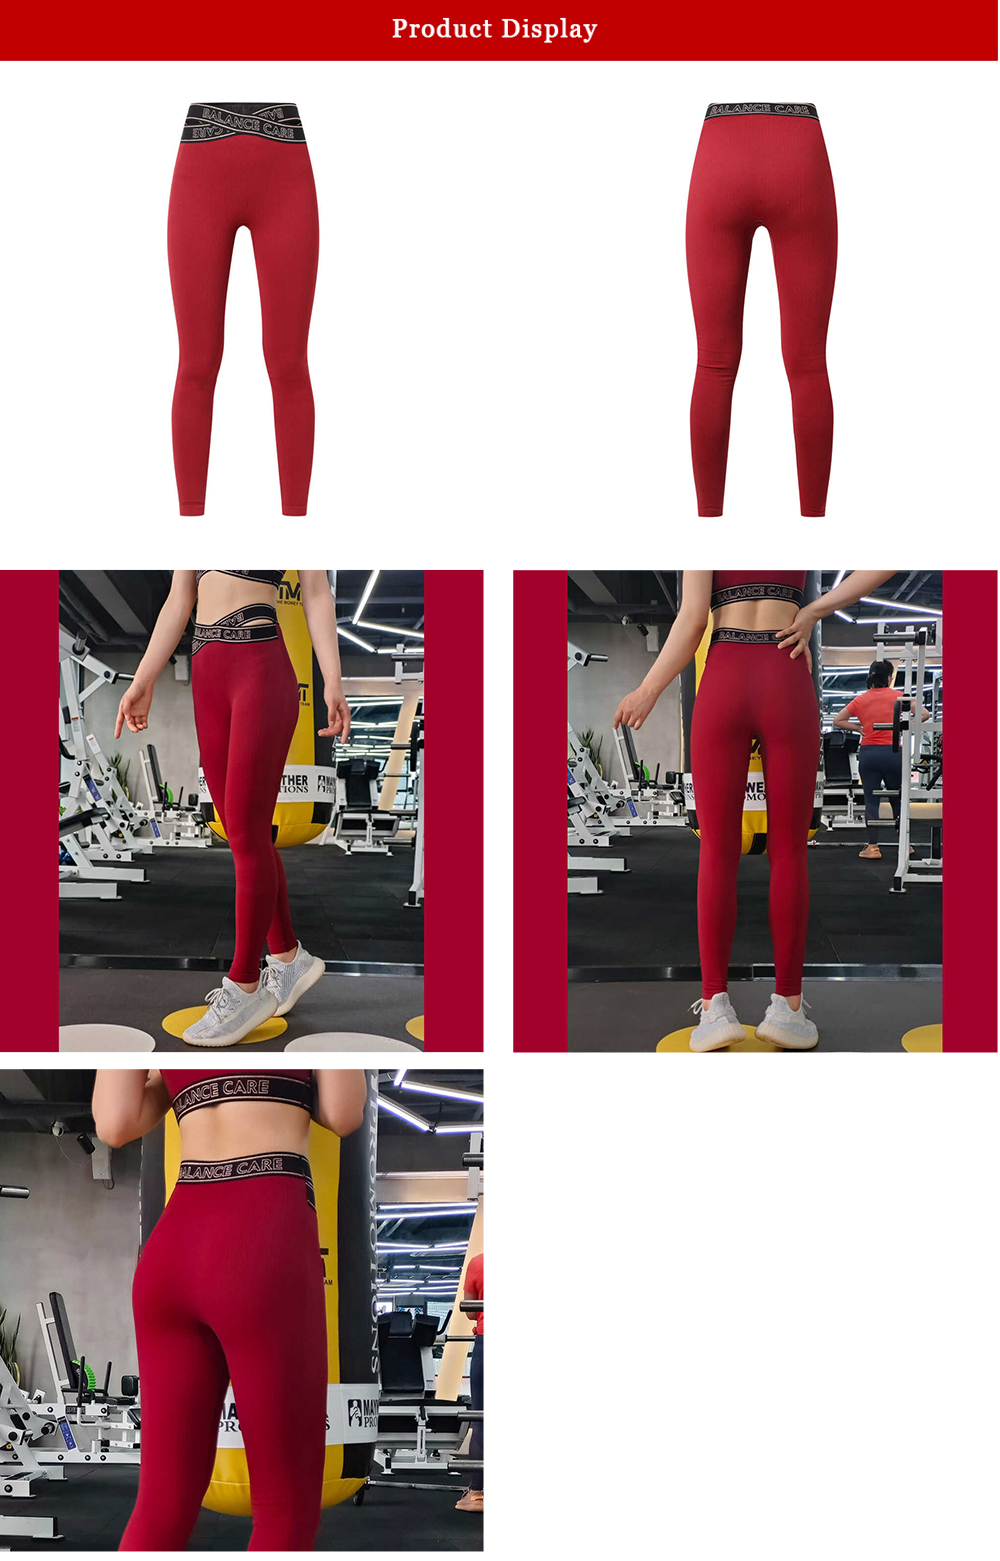 Red spandex sport legging